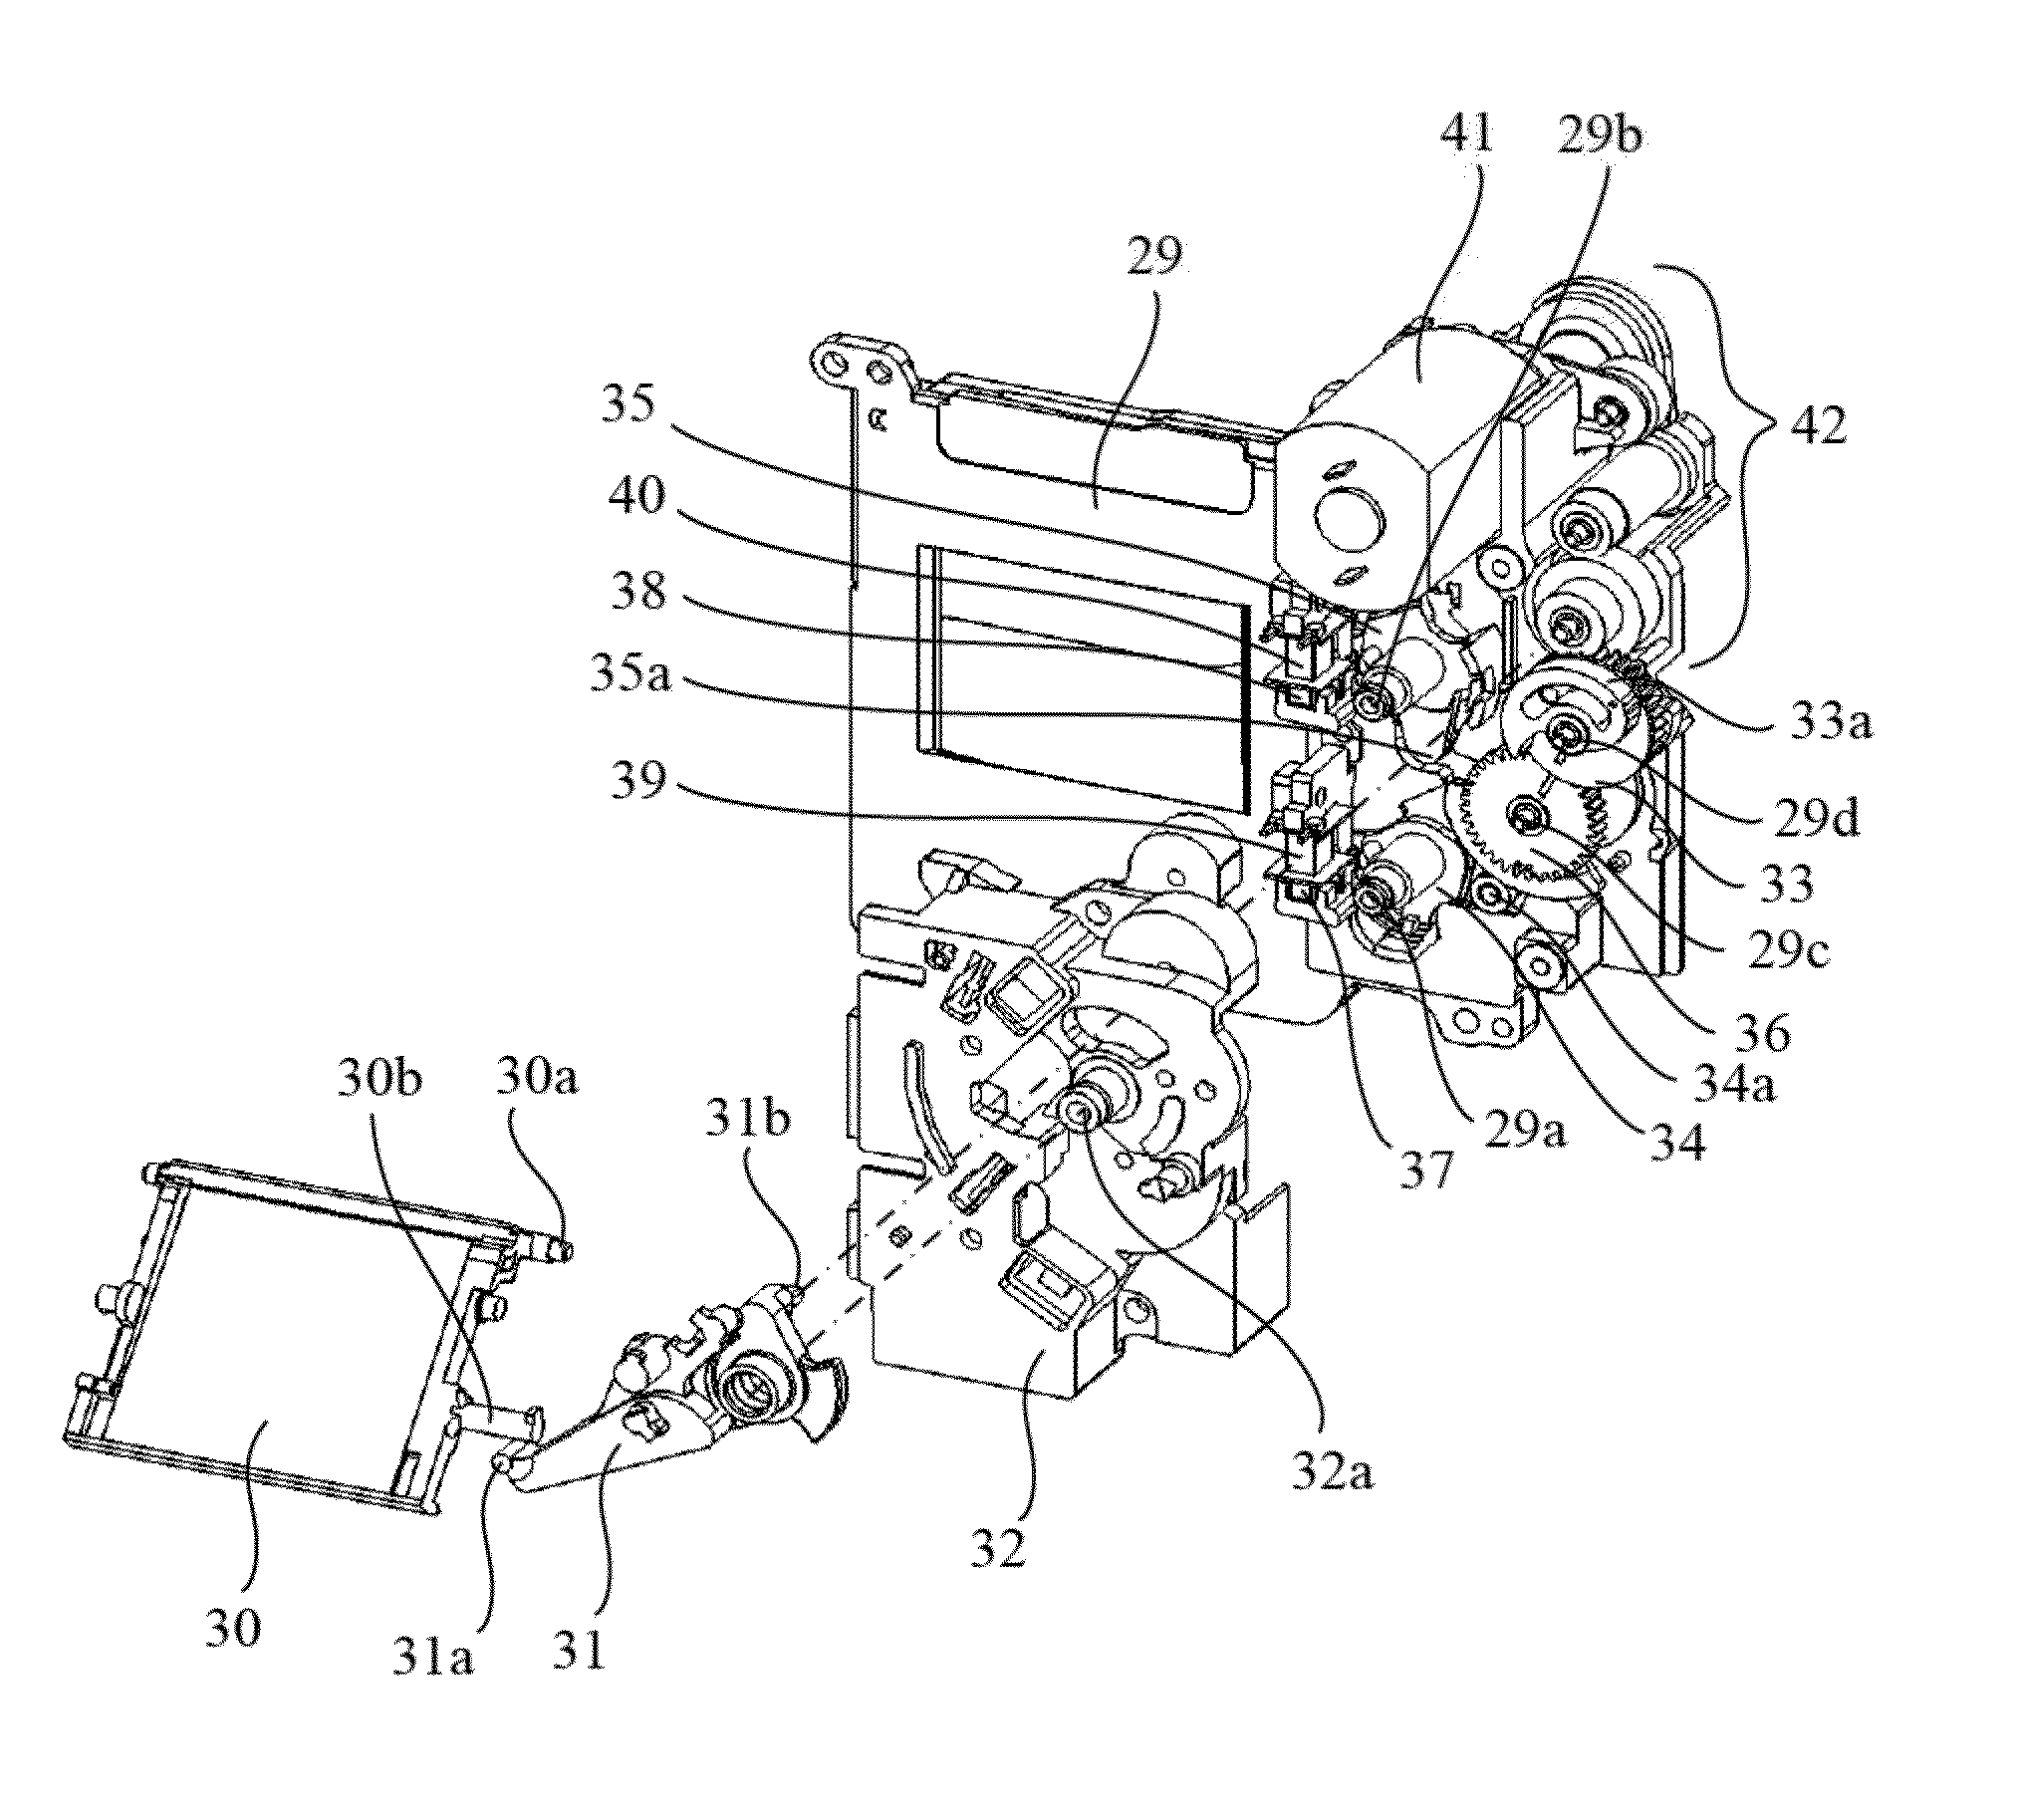 Image-pickup apparatus having shutter apparatus